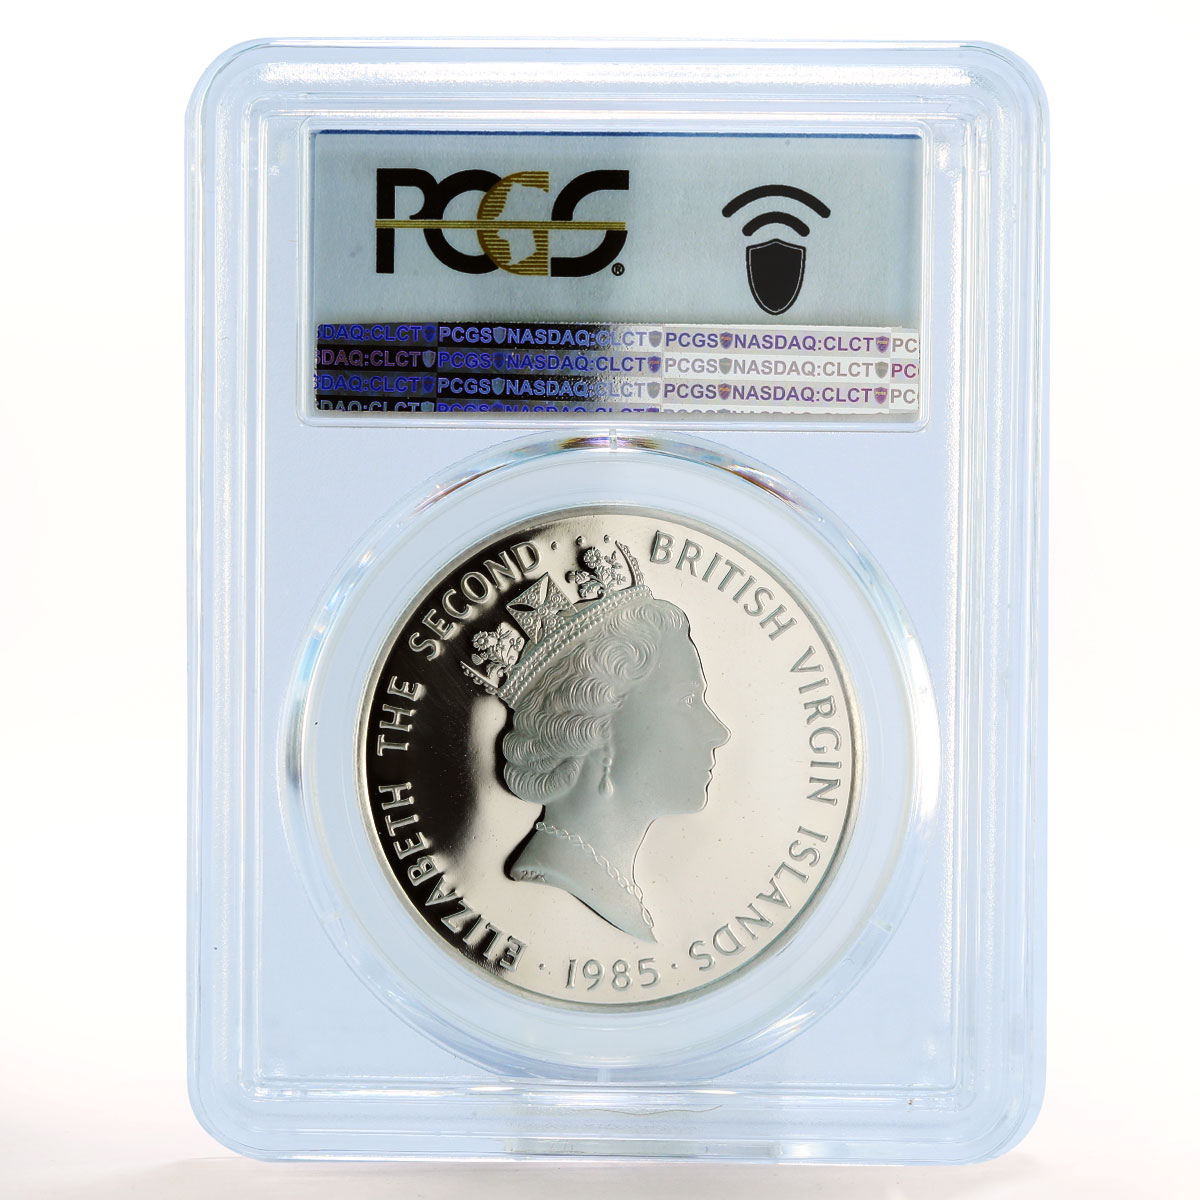 British Virgin Islands 20 dollars Religious Medallion PR69 PCGS silver coin 1985